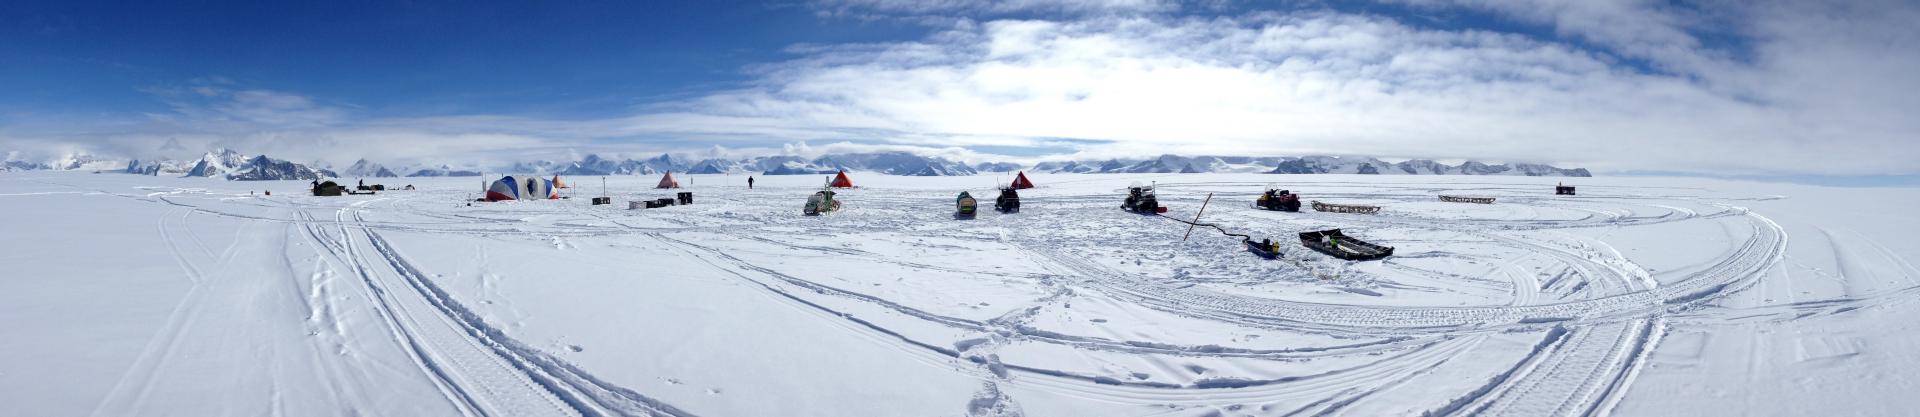 Antarctica research field course